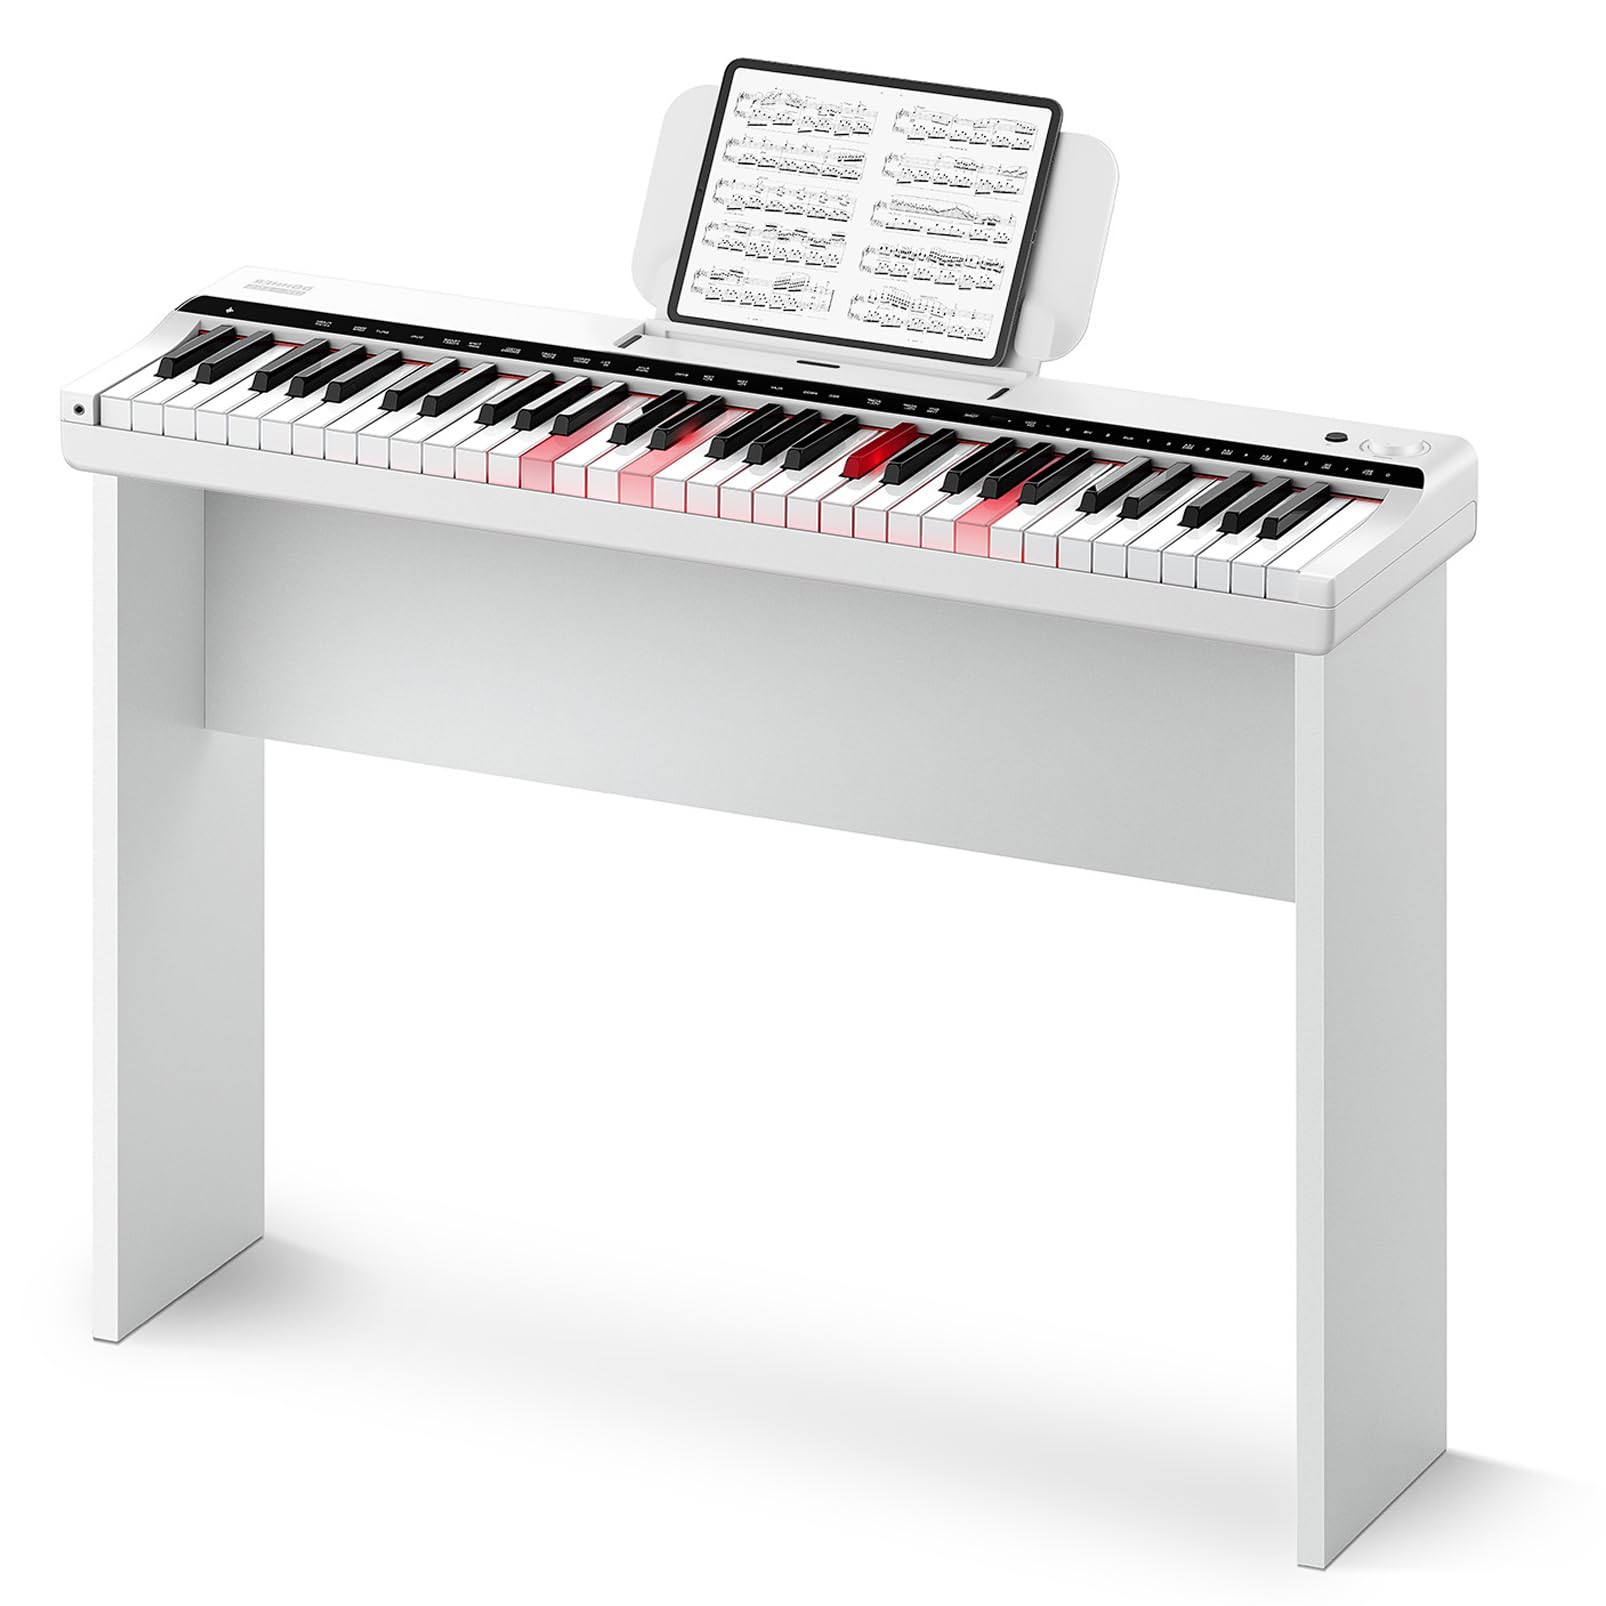 Donner 電子キーボード ピアノ 61鍵盤 光る鍵盤 充電可能 500音色 300リズム 60デモ MIDI対応 軽量 コンパクト 持ち運び便利 初心者 子供 練習 木製スタンド 譜面台 電源アダプター 日本語説明…